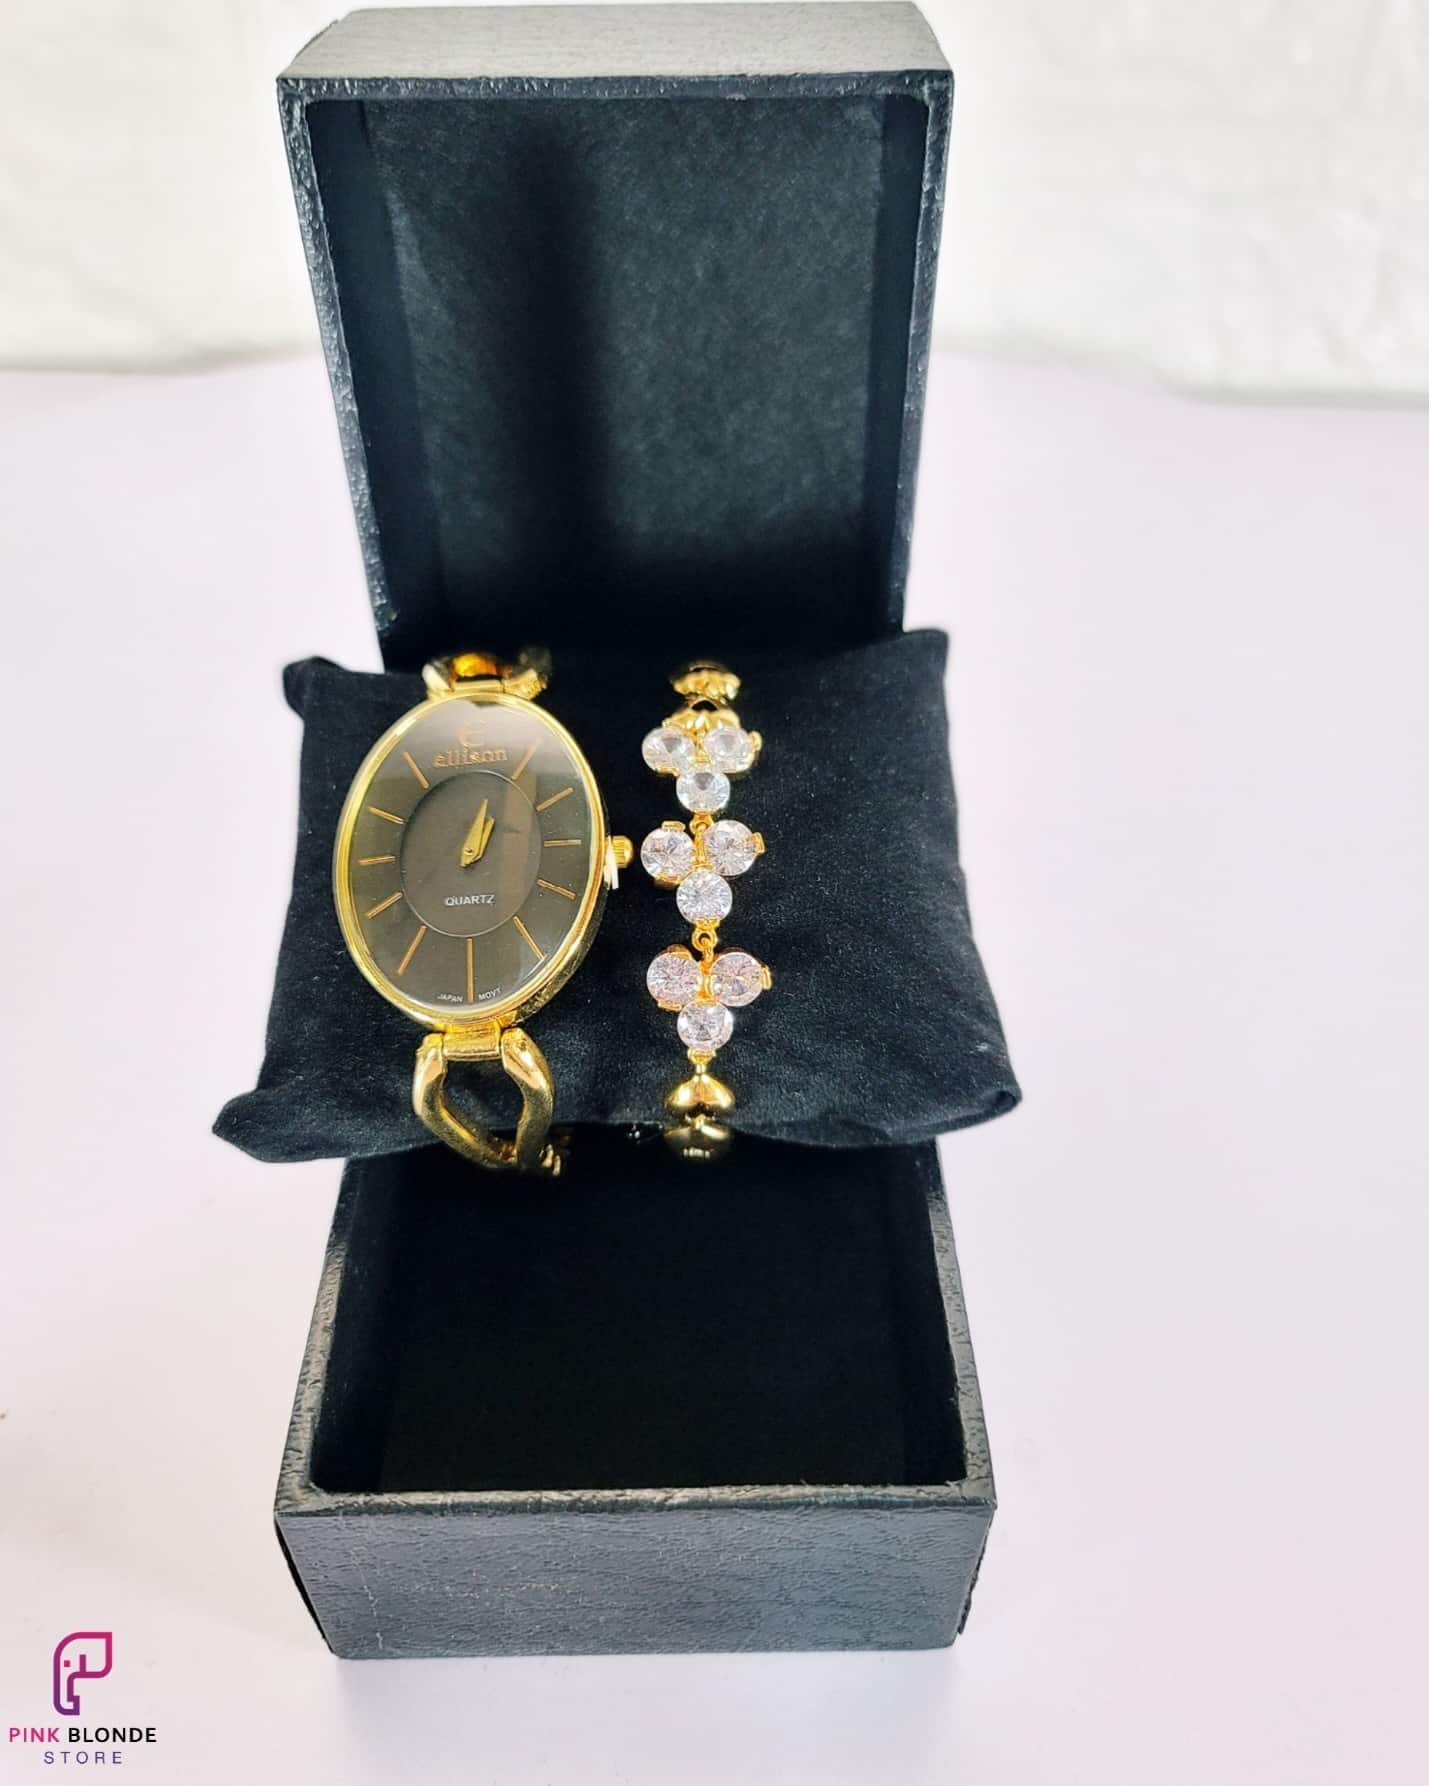 Ellison gold watch with bracelet